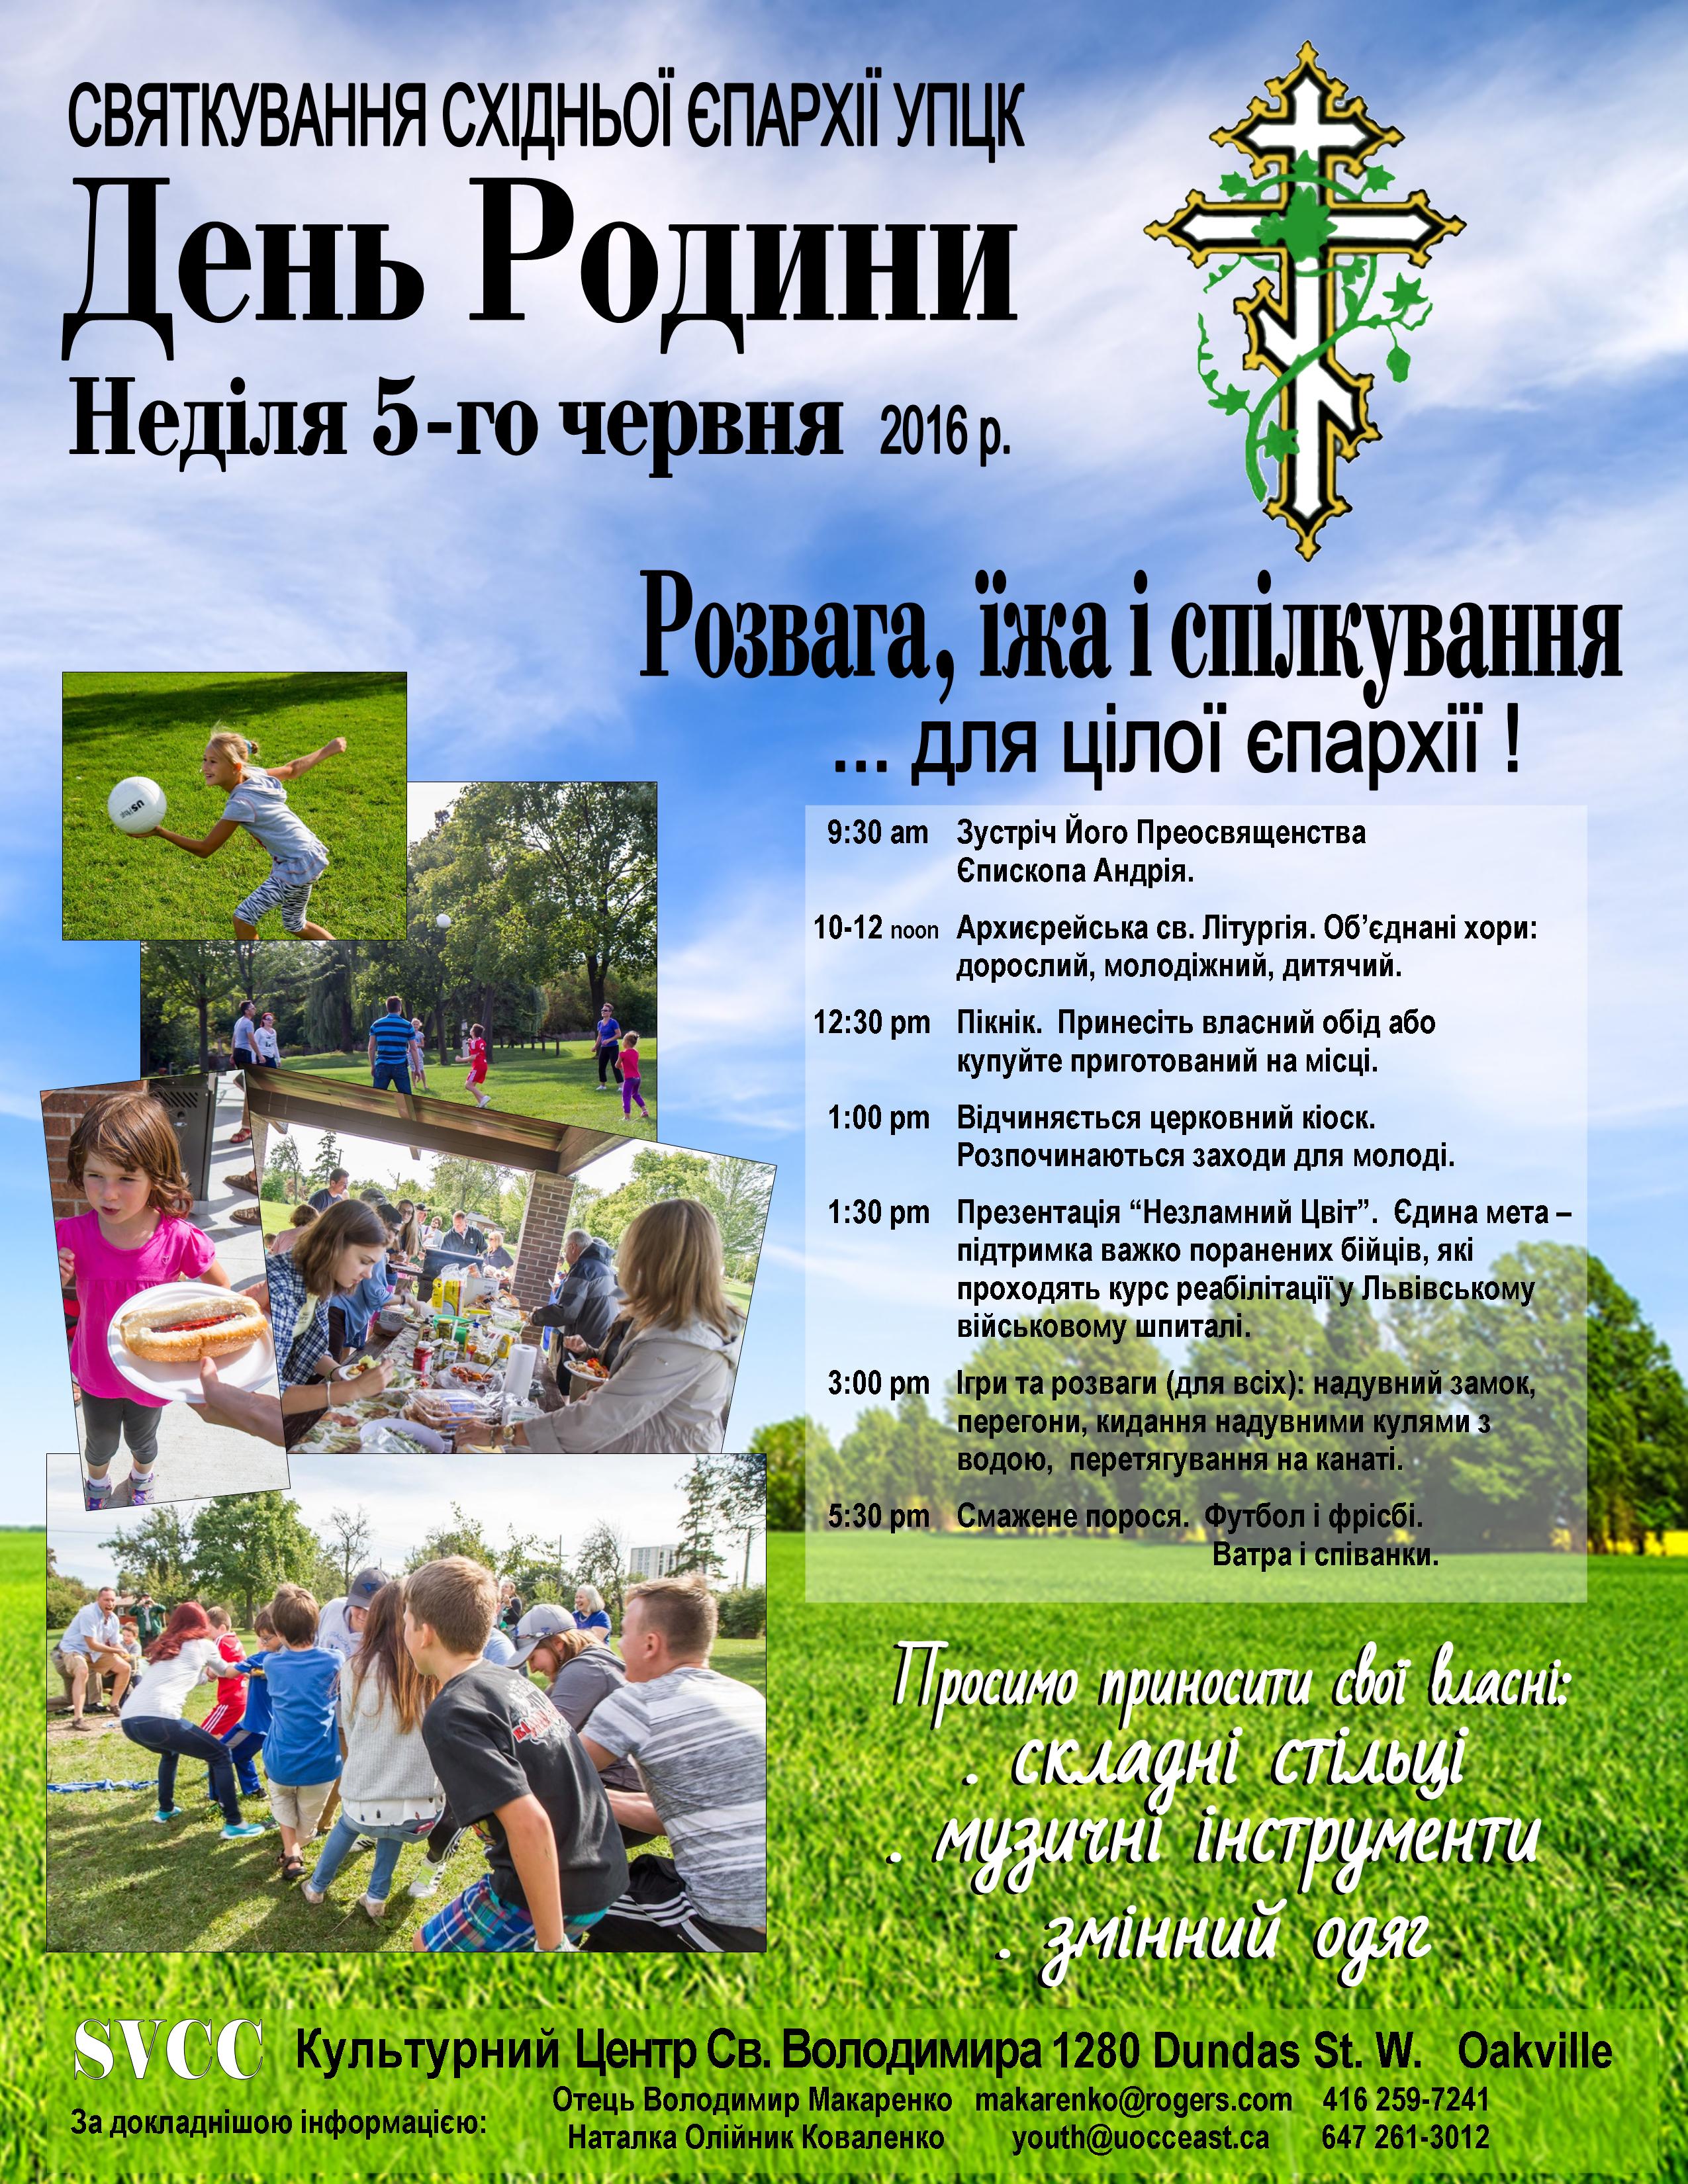 UOCC East — Eastern eparchy Family Day - Ukrainian version